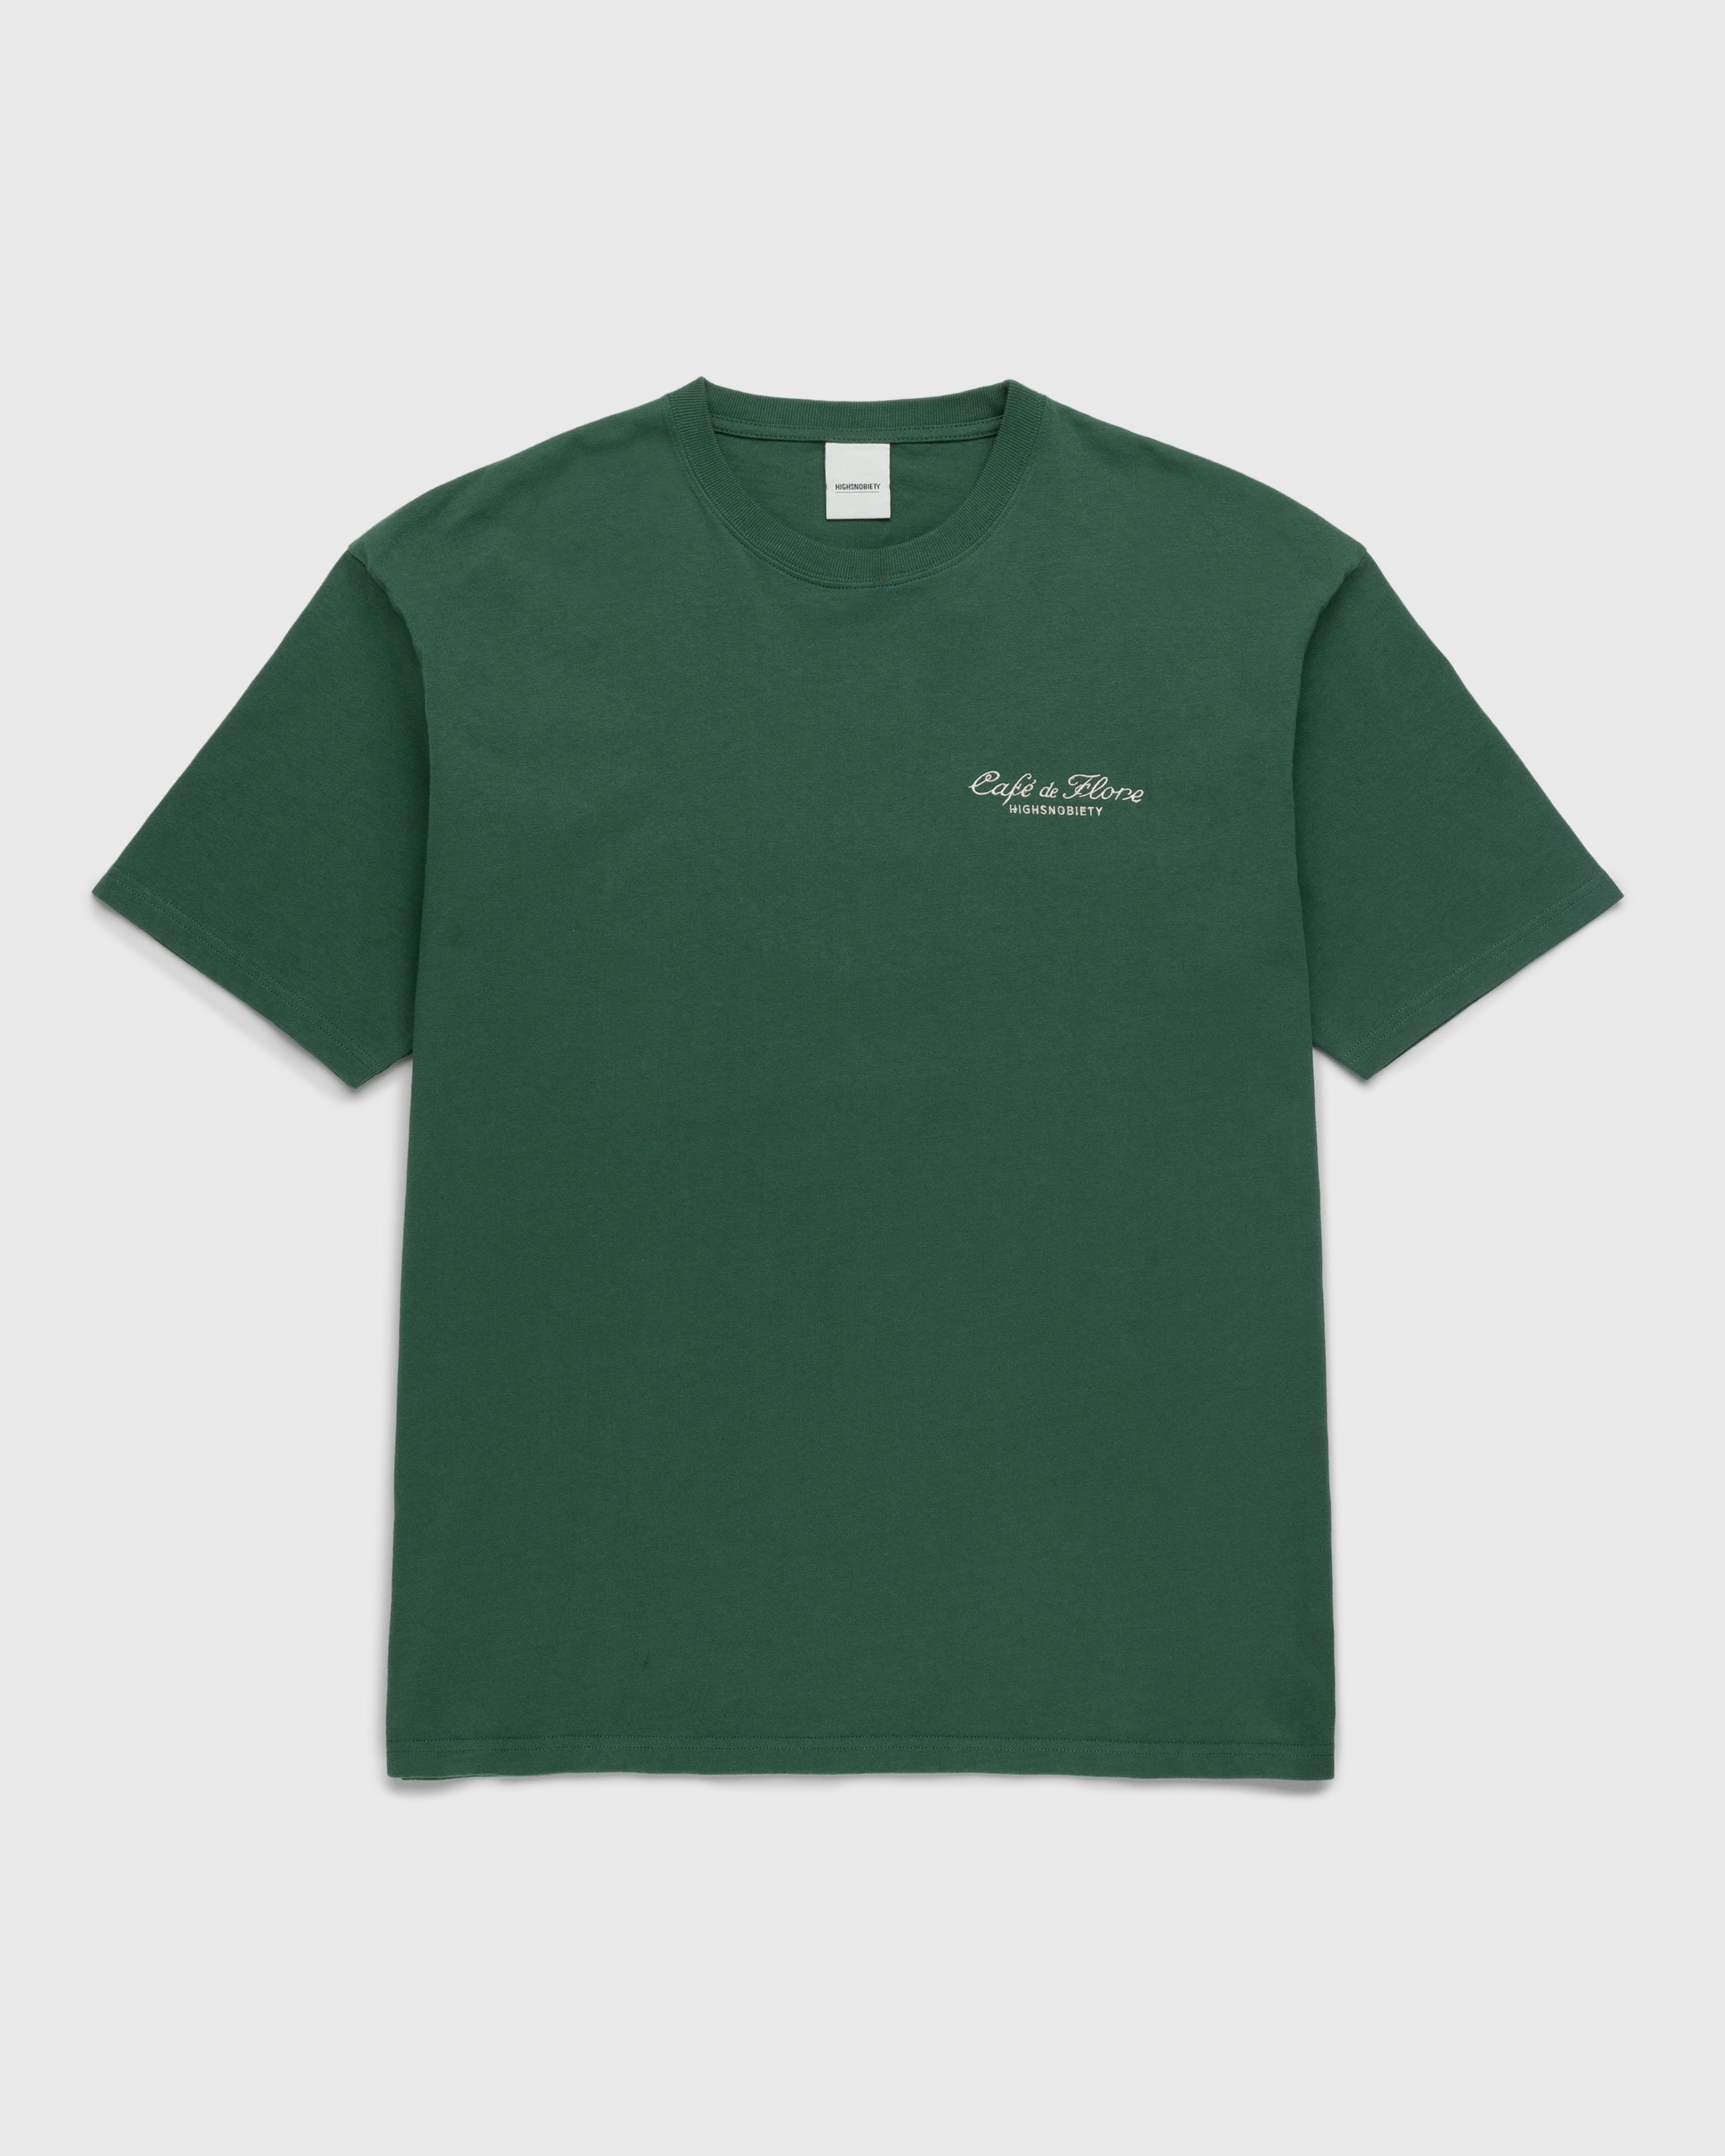 Café de Flore x Highsnobiety - Short Sleeve T-Shirt Green - Clothing - Green - Image 2